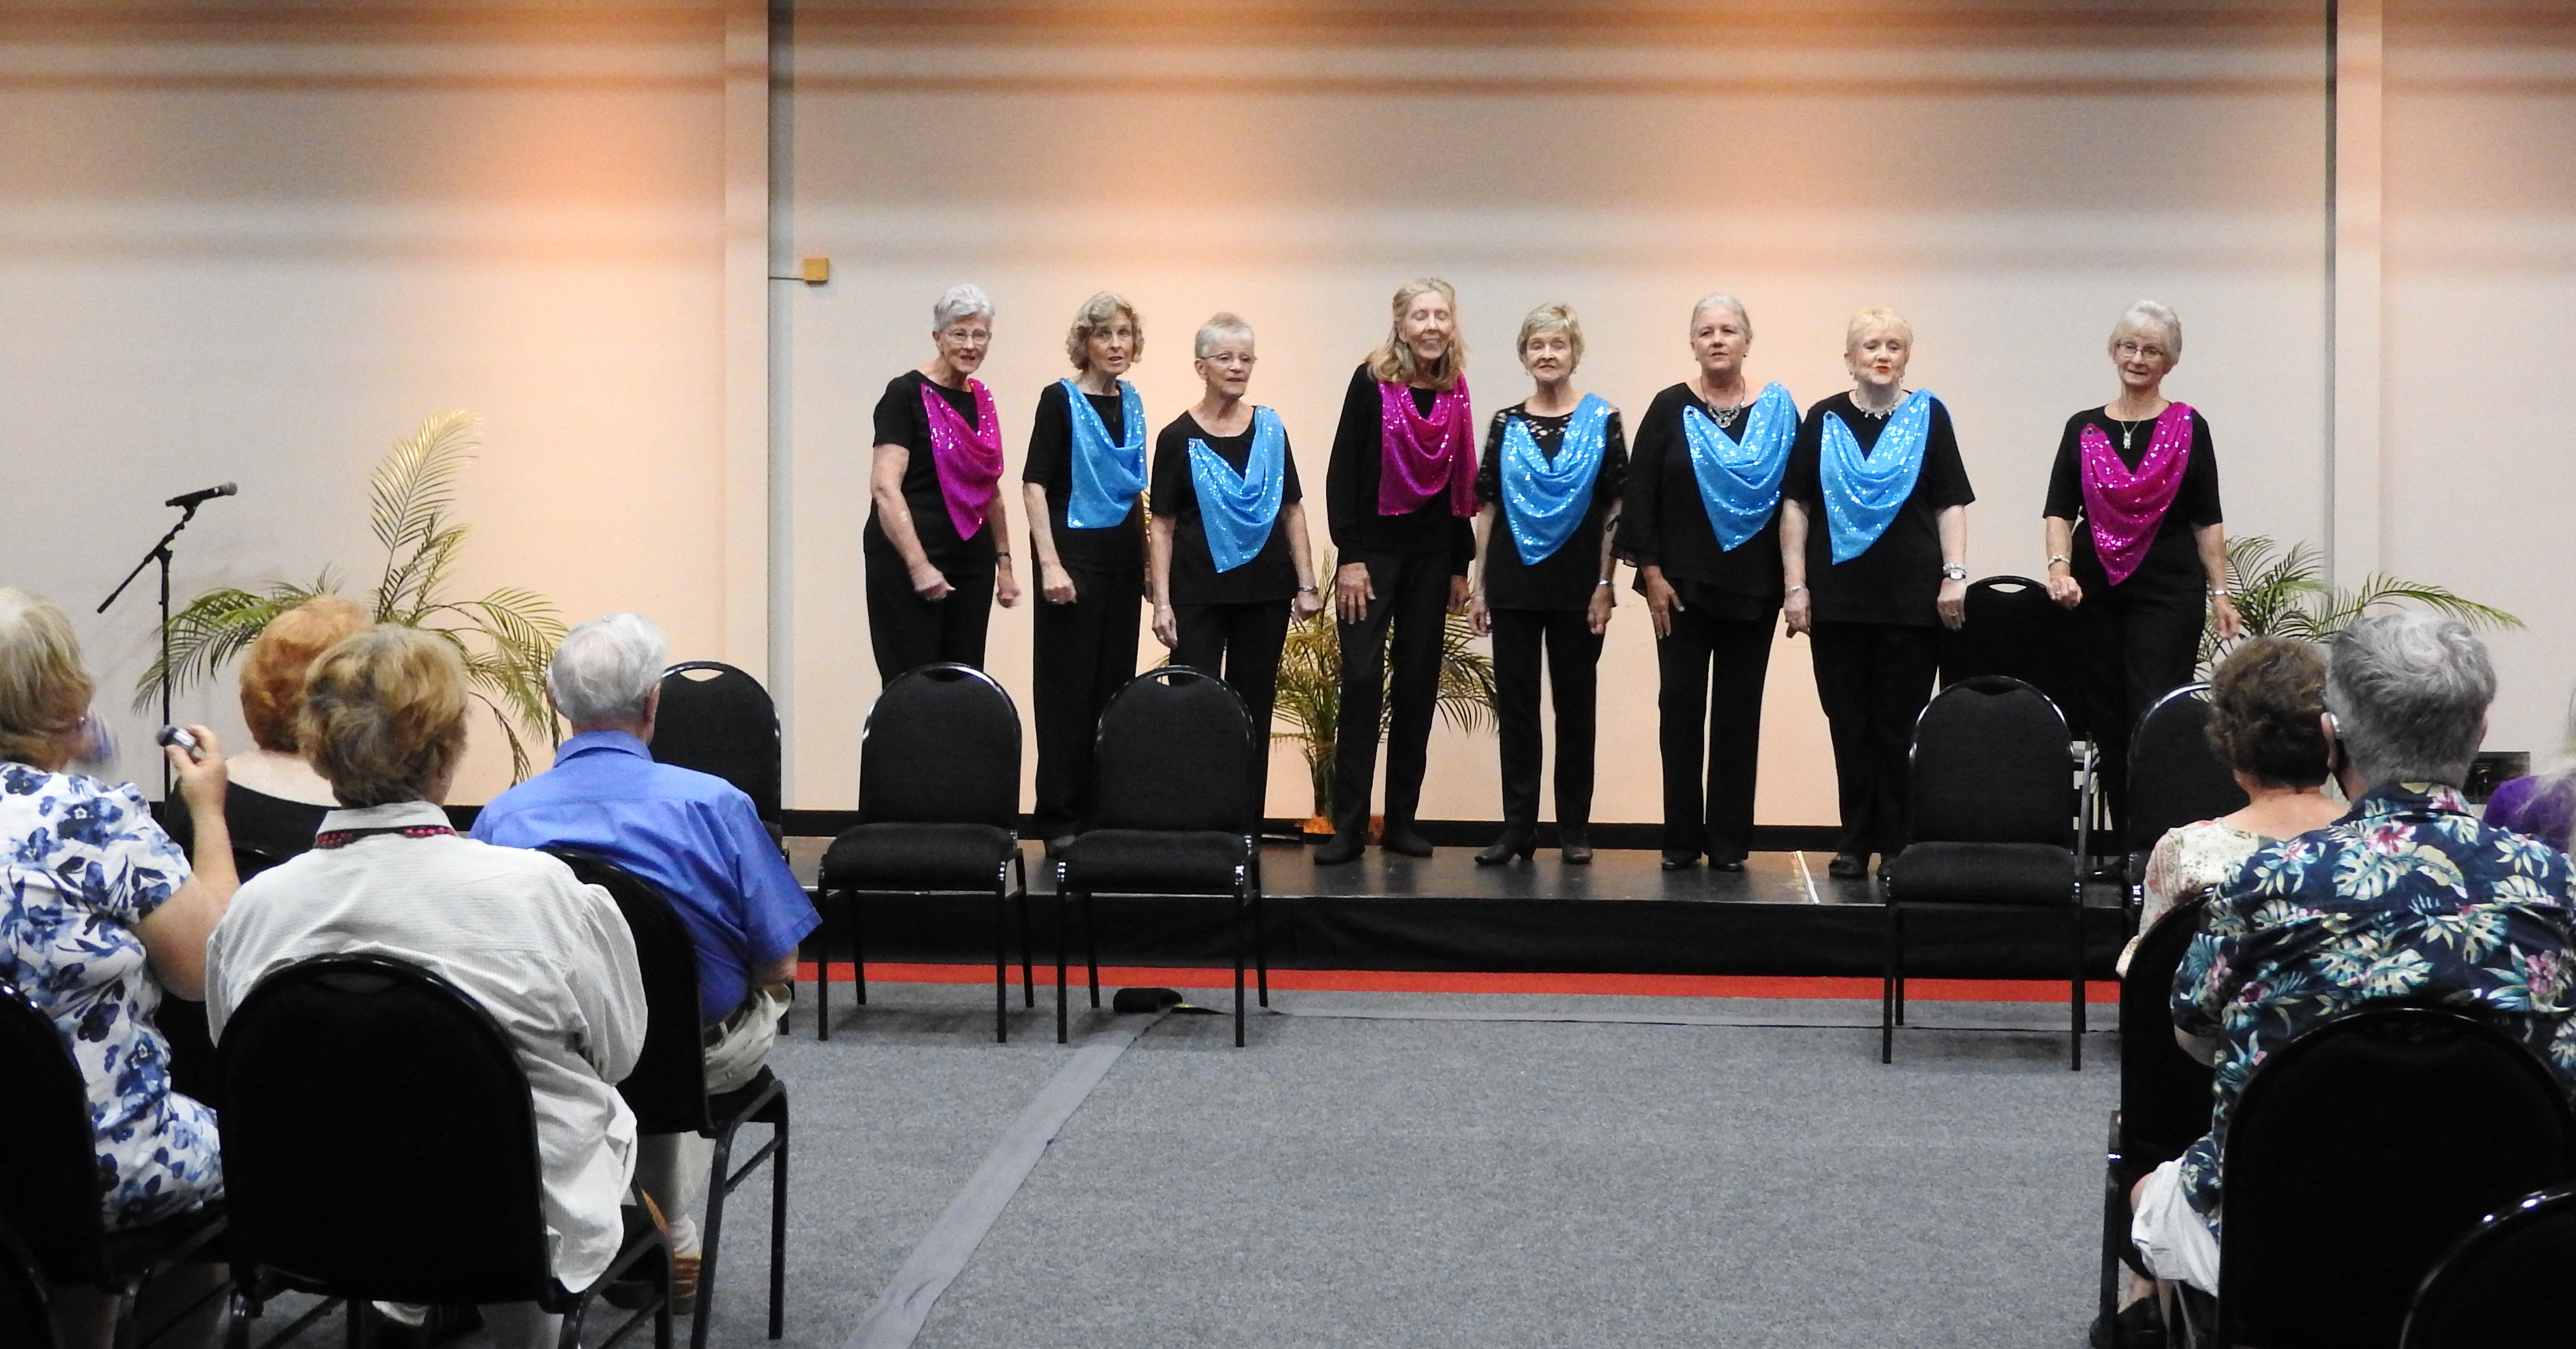 2022 - 13 November performance at The Brolga as guest artists of Maryborough Choral Society's Concert